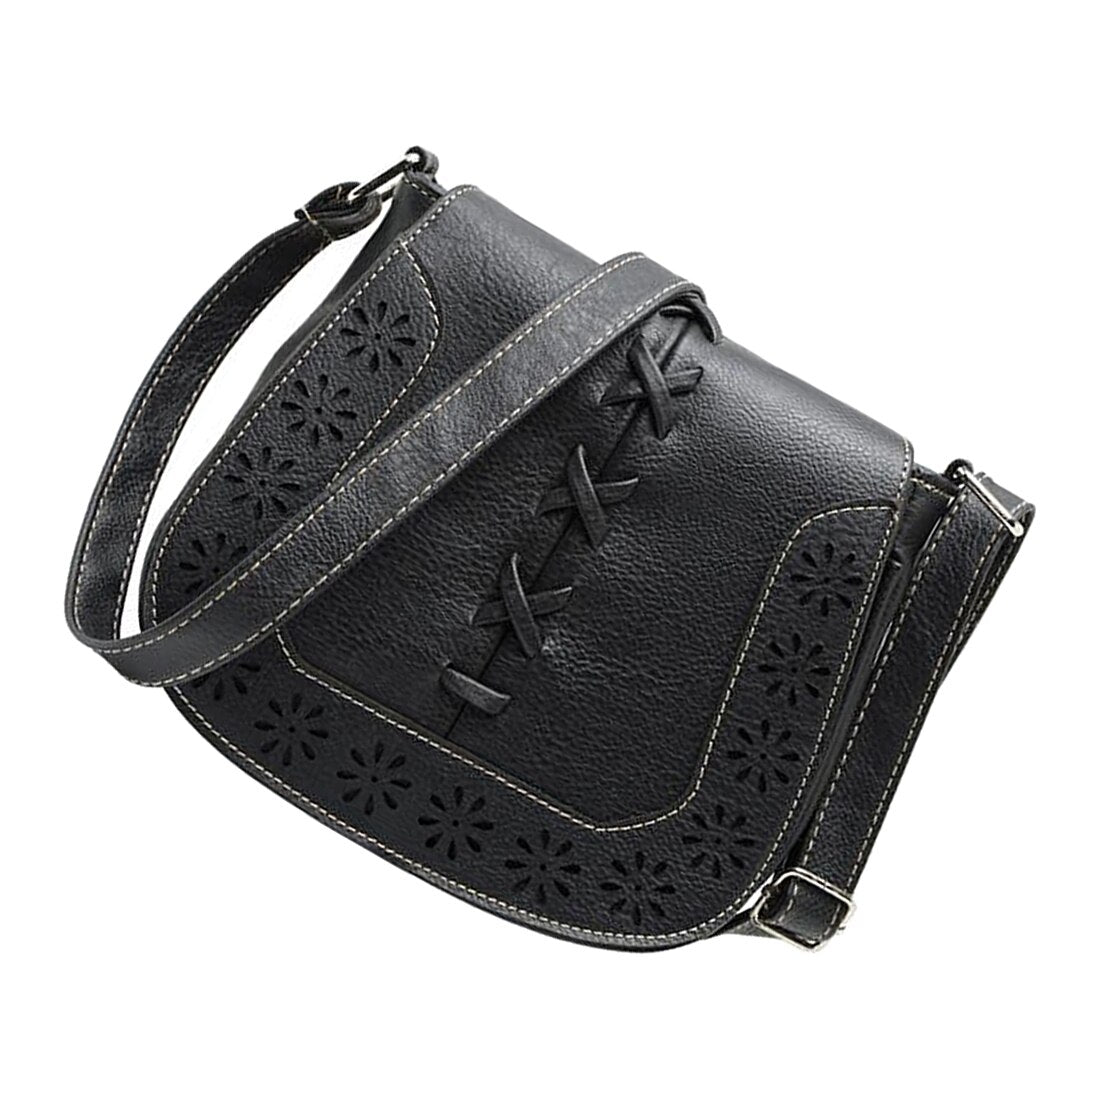 Hot Fashion Women Leather Handbags Retro Hollow Out Crossbody Shoulder Bag Hollow Out Lady Vintage Bag bags Black - ebowsos